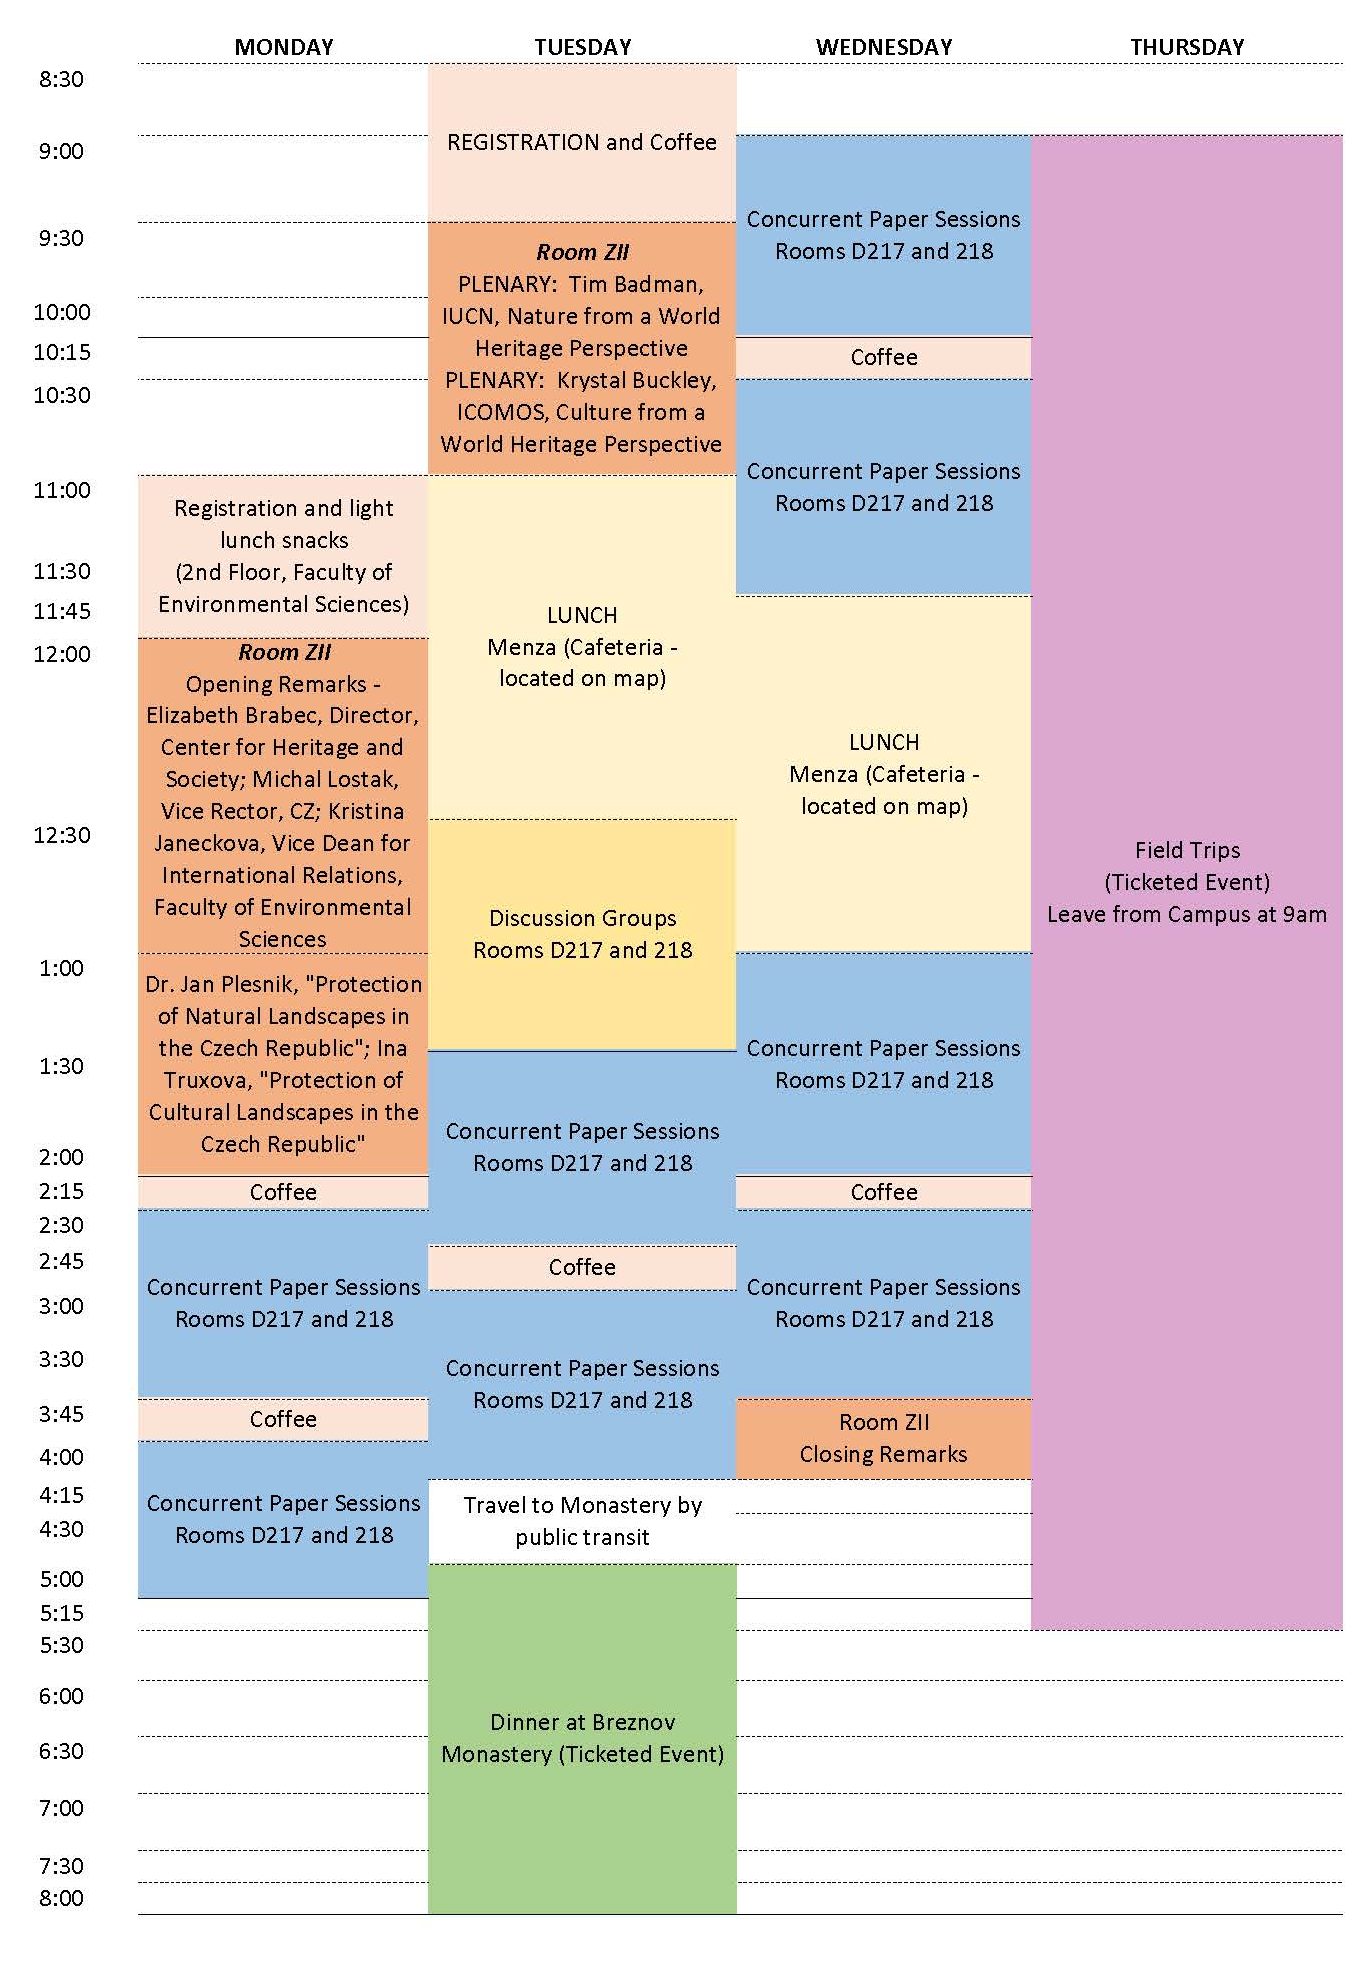 Schedule Overview 5-14